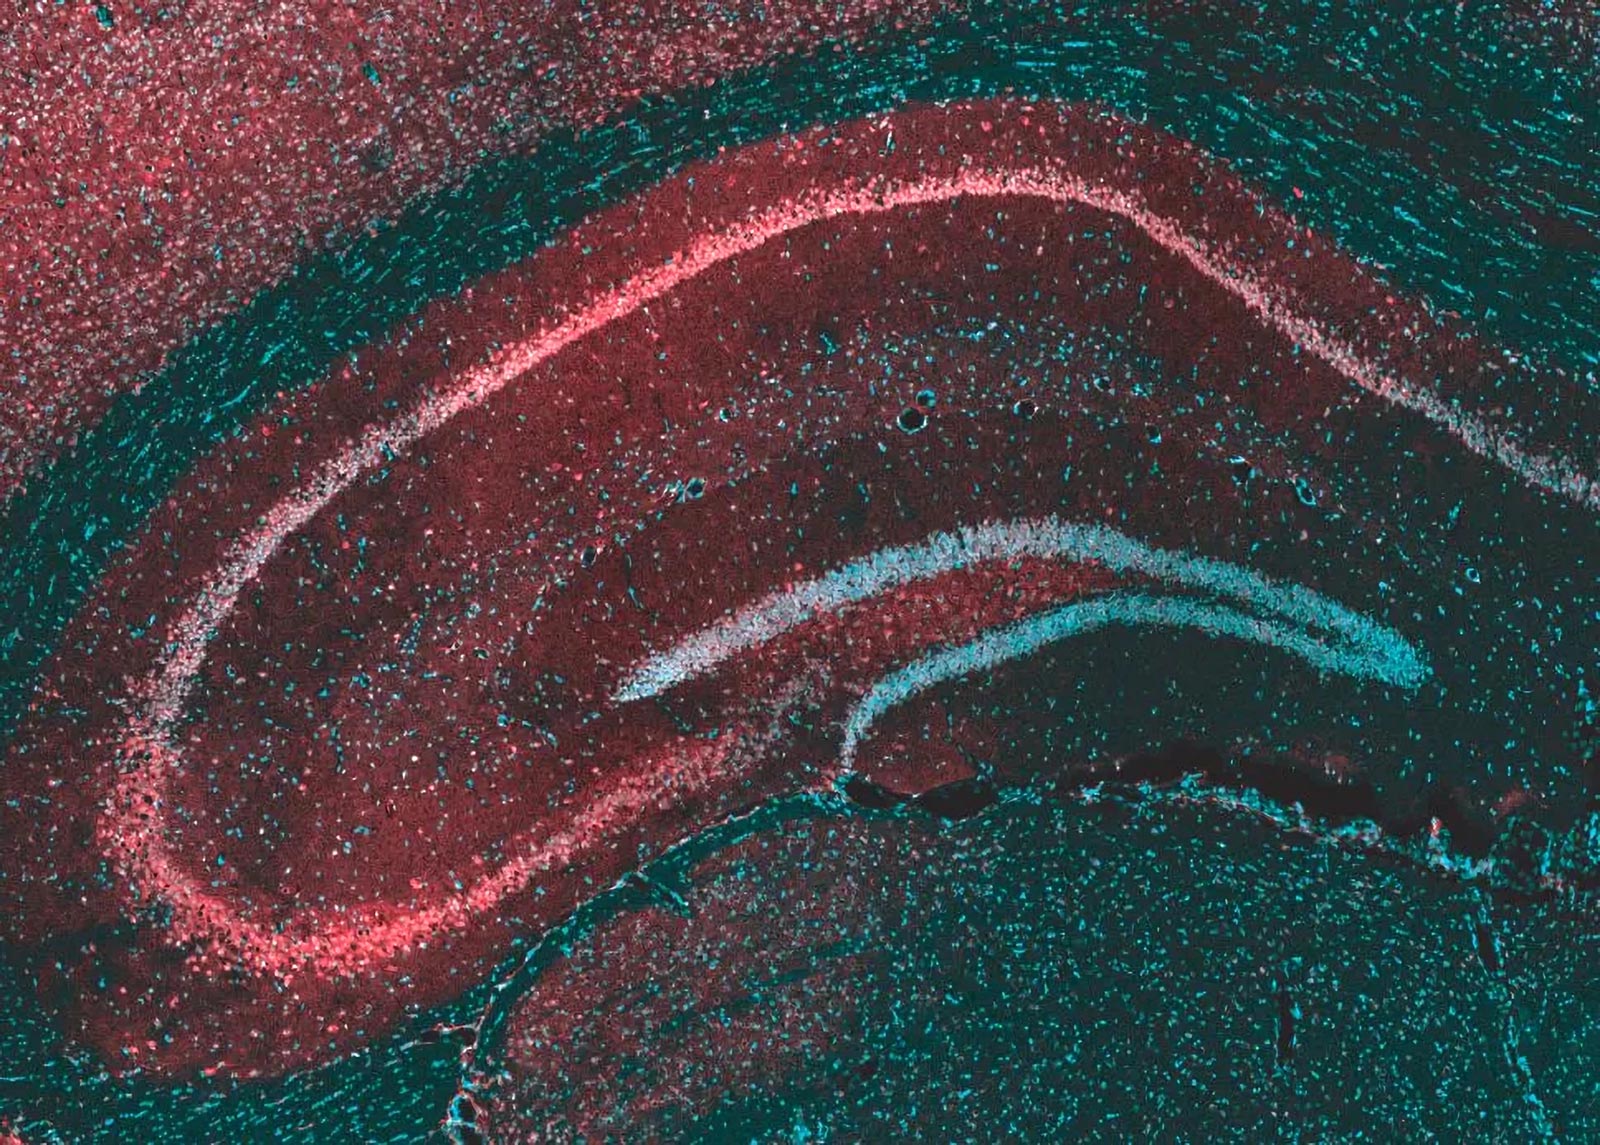 Hippocampus Brain Region Microscope Image